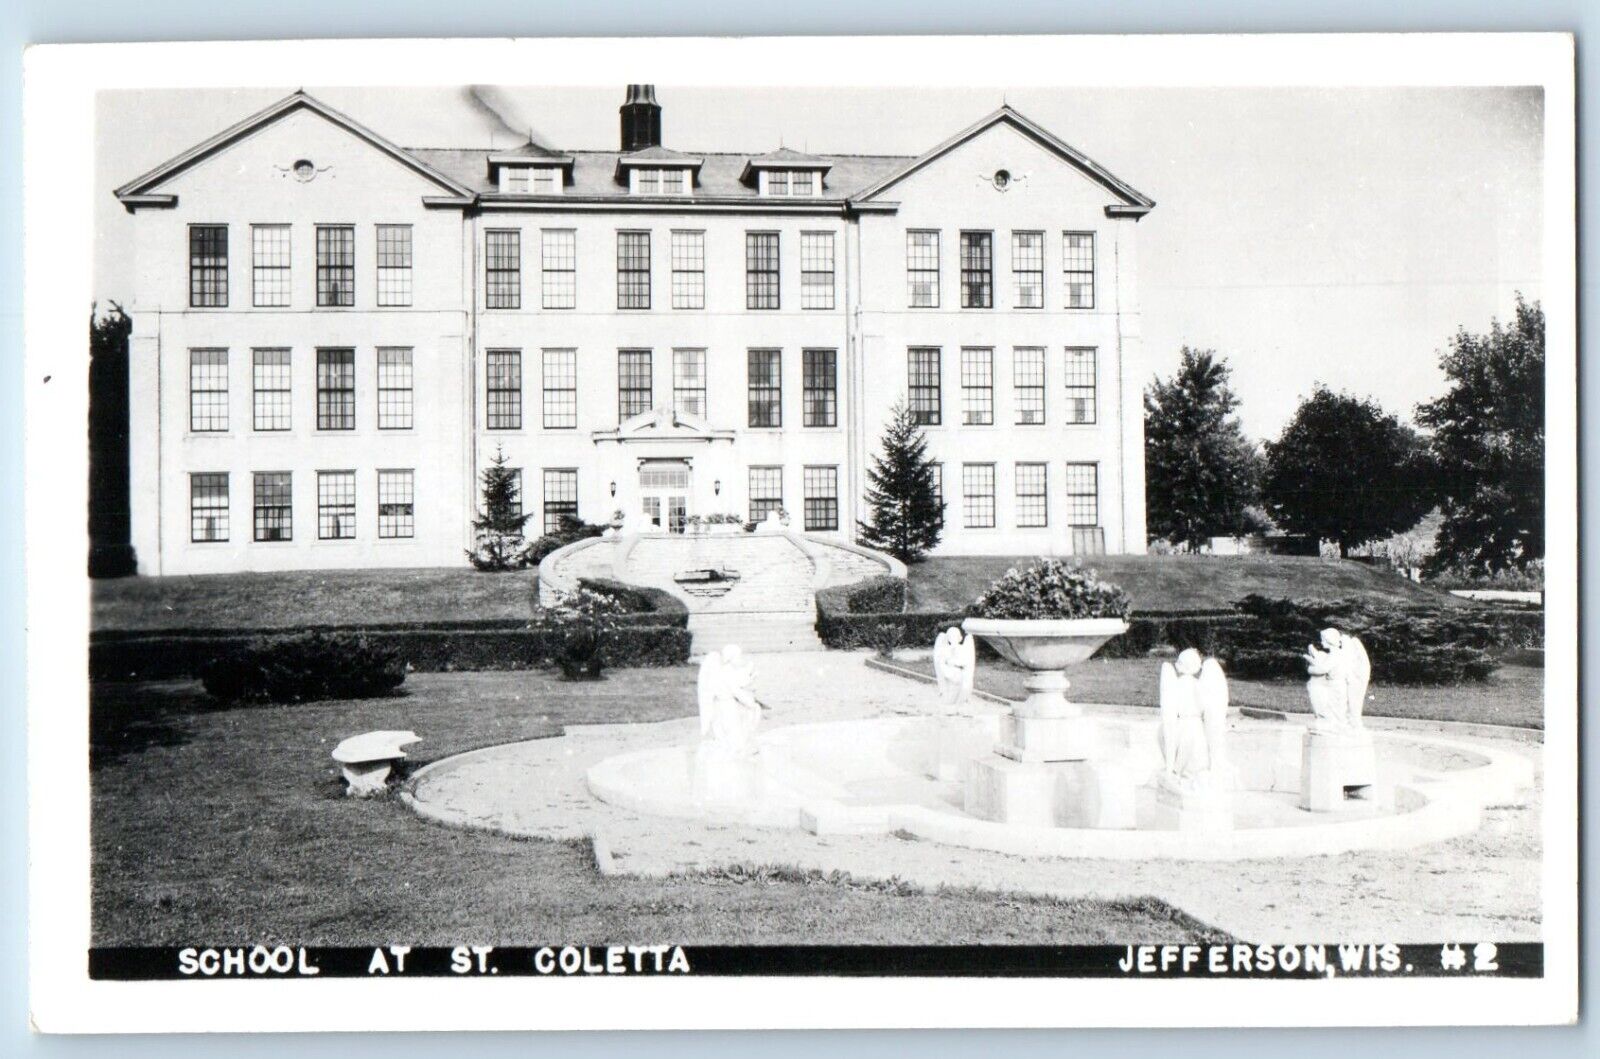 Jefferson Wisconsin WI Postcard RPPC Photo School At St. Colleta c1940's Vintage